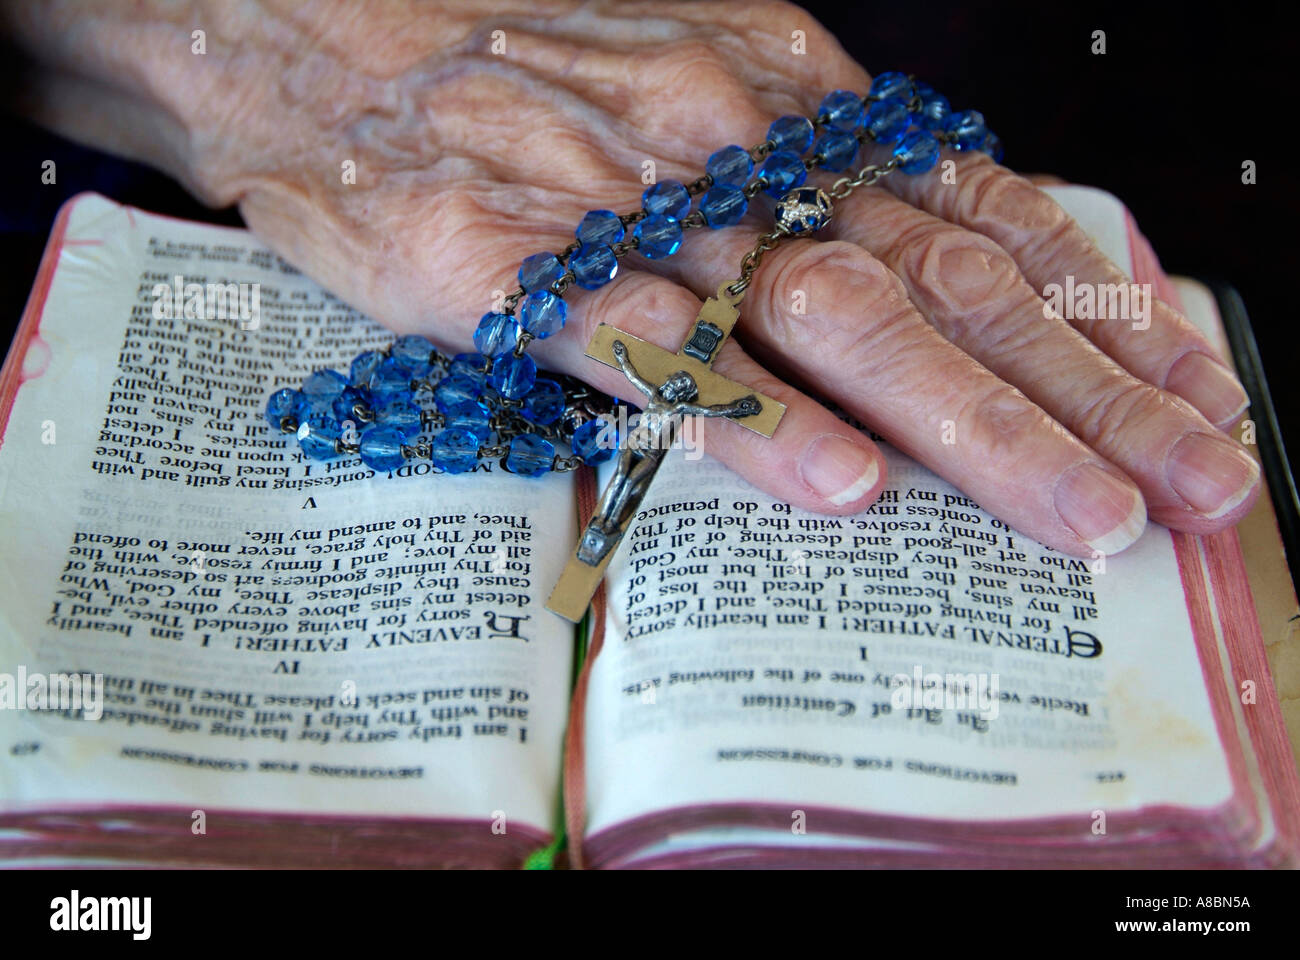 Senior female reading the bible and praying Stock Photo